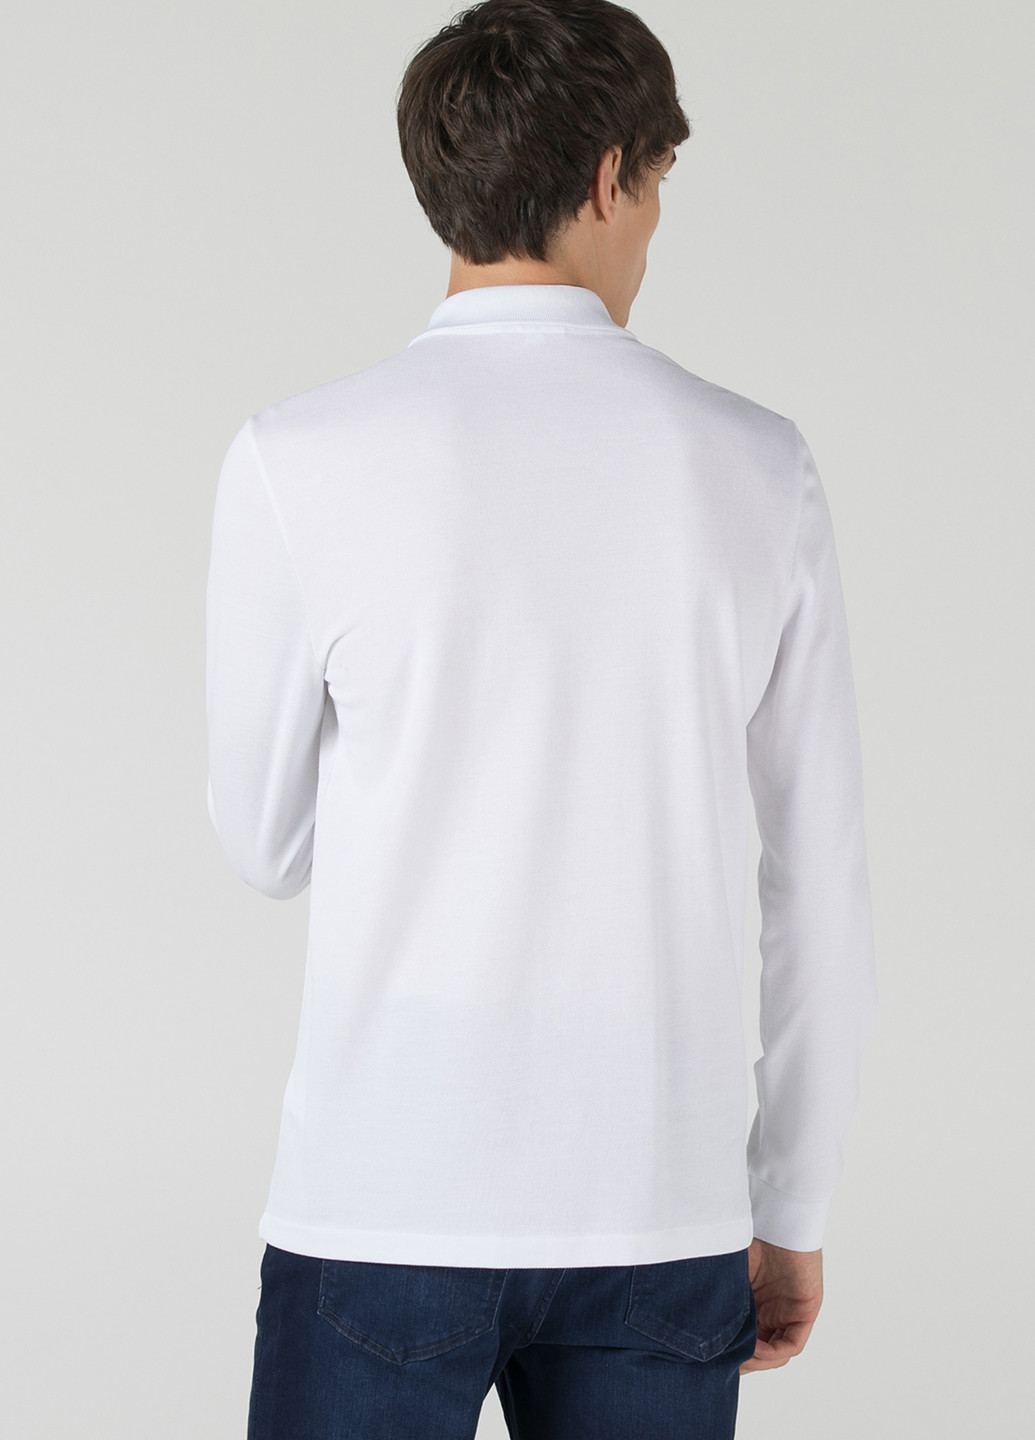 Белая футболка-поло для мужчин Lacoste однотонная